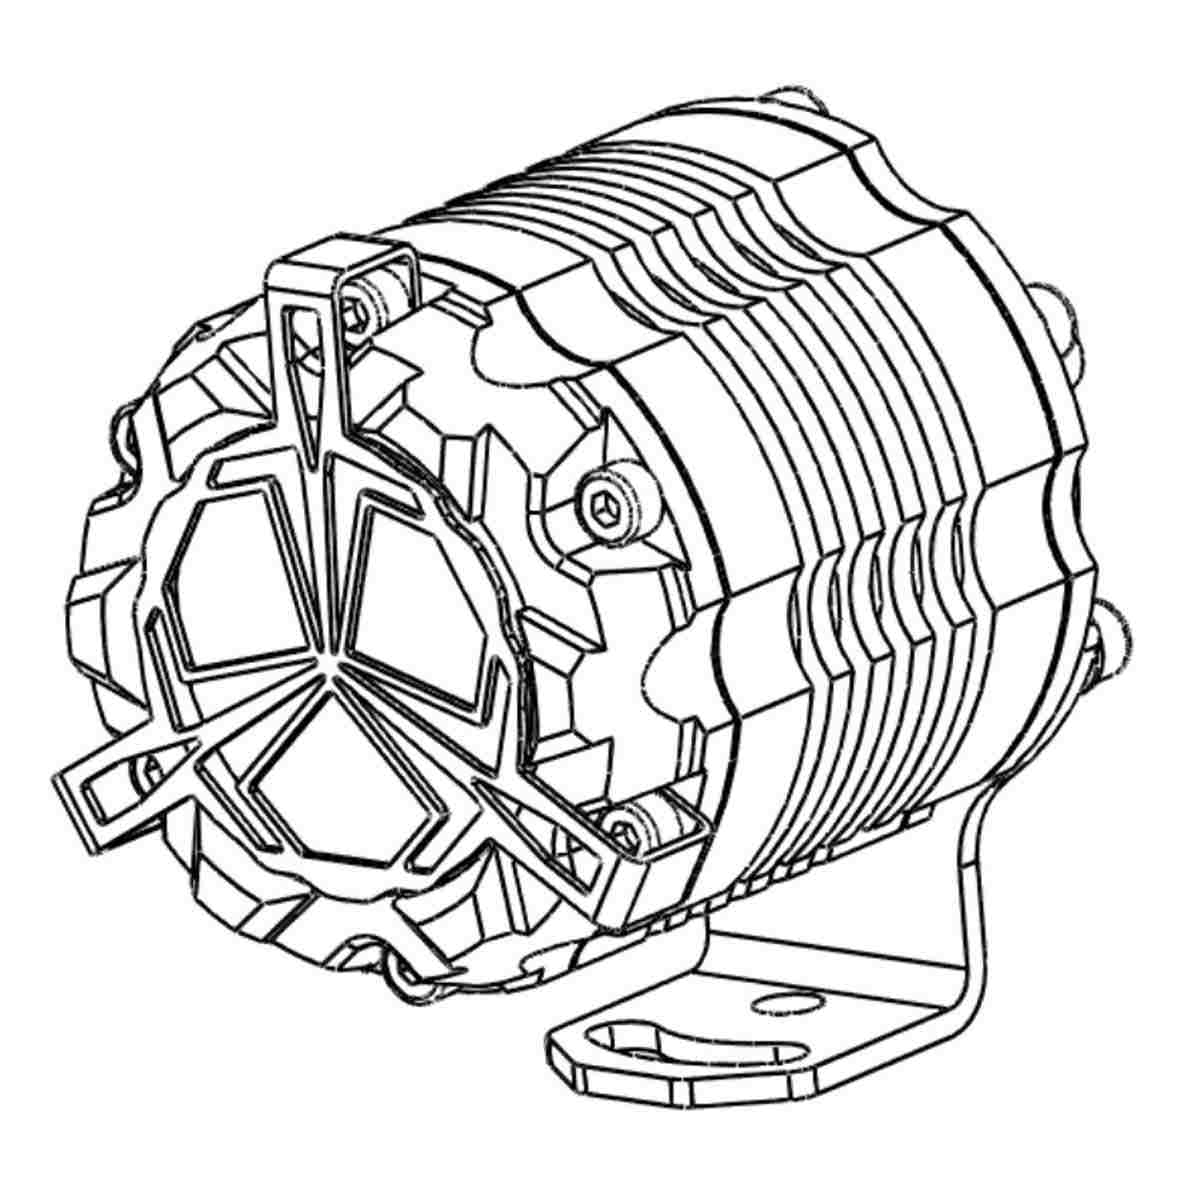 LED Headlight for Dualtron X - 30W